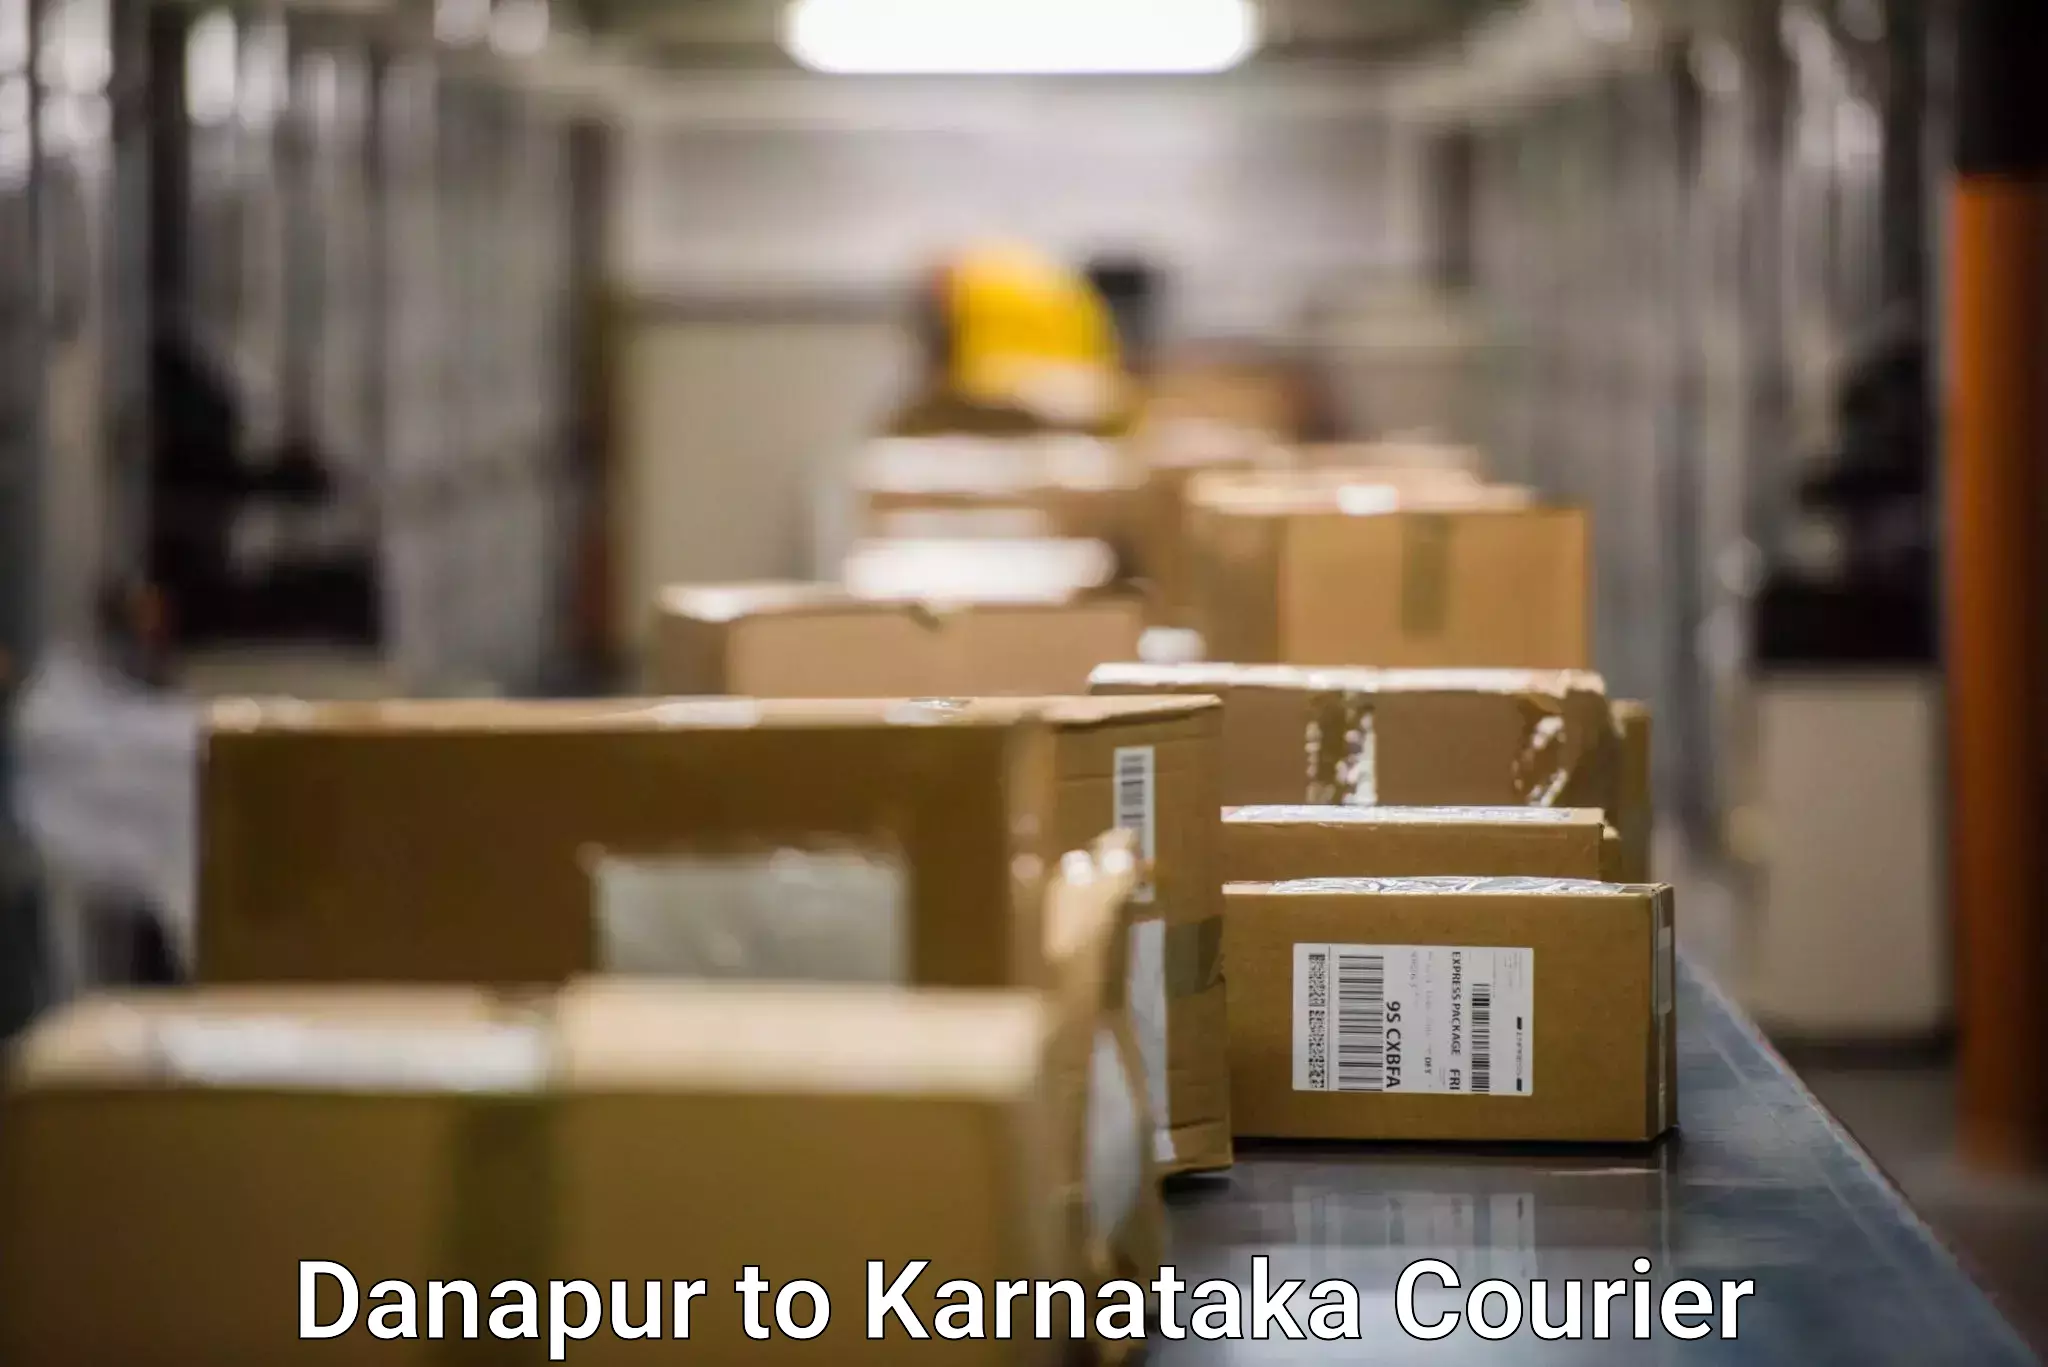 High-priority parcel service Danapur to Karnataka